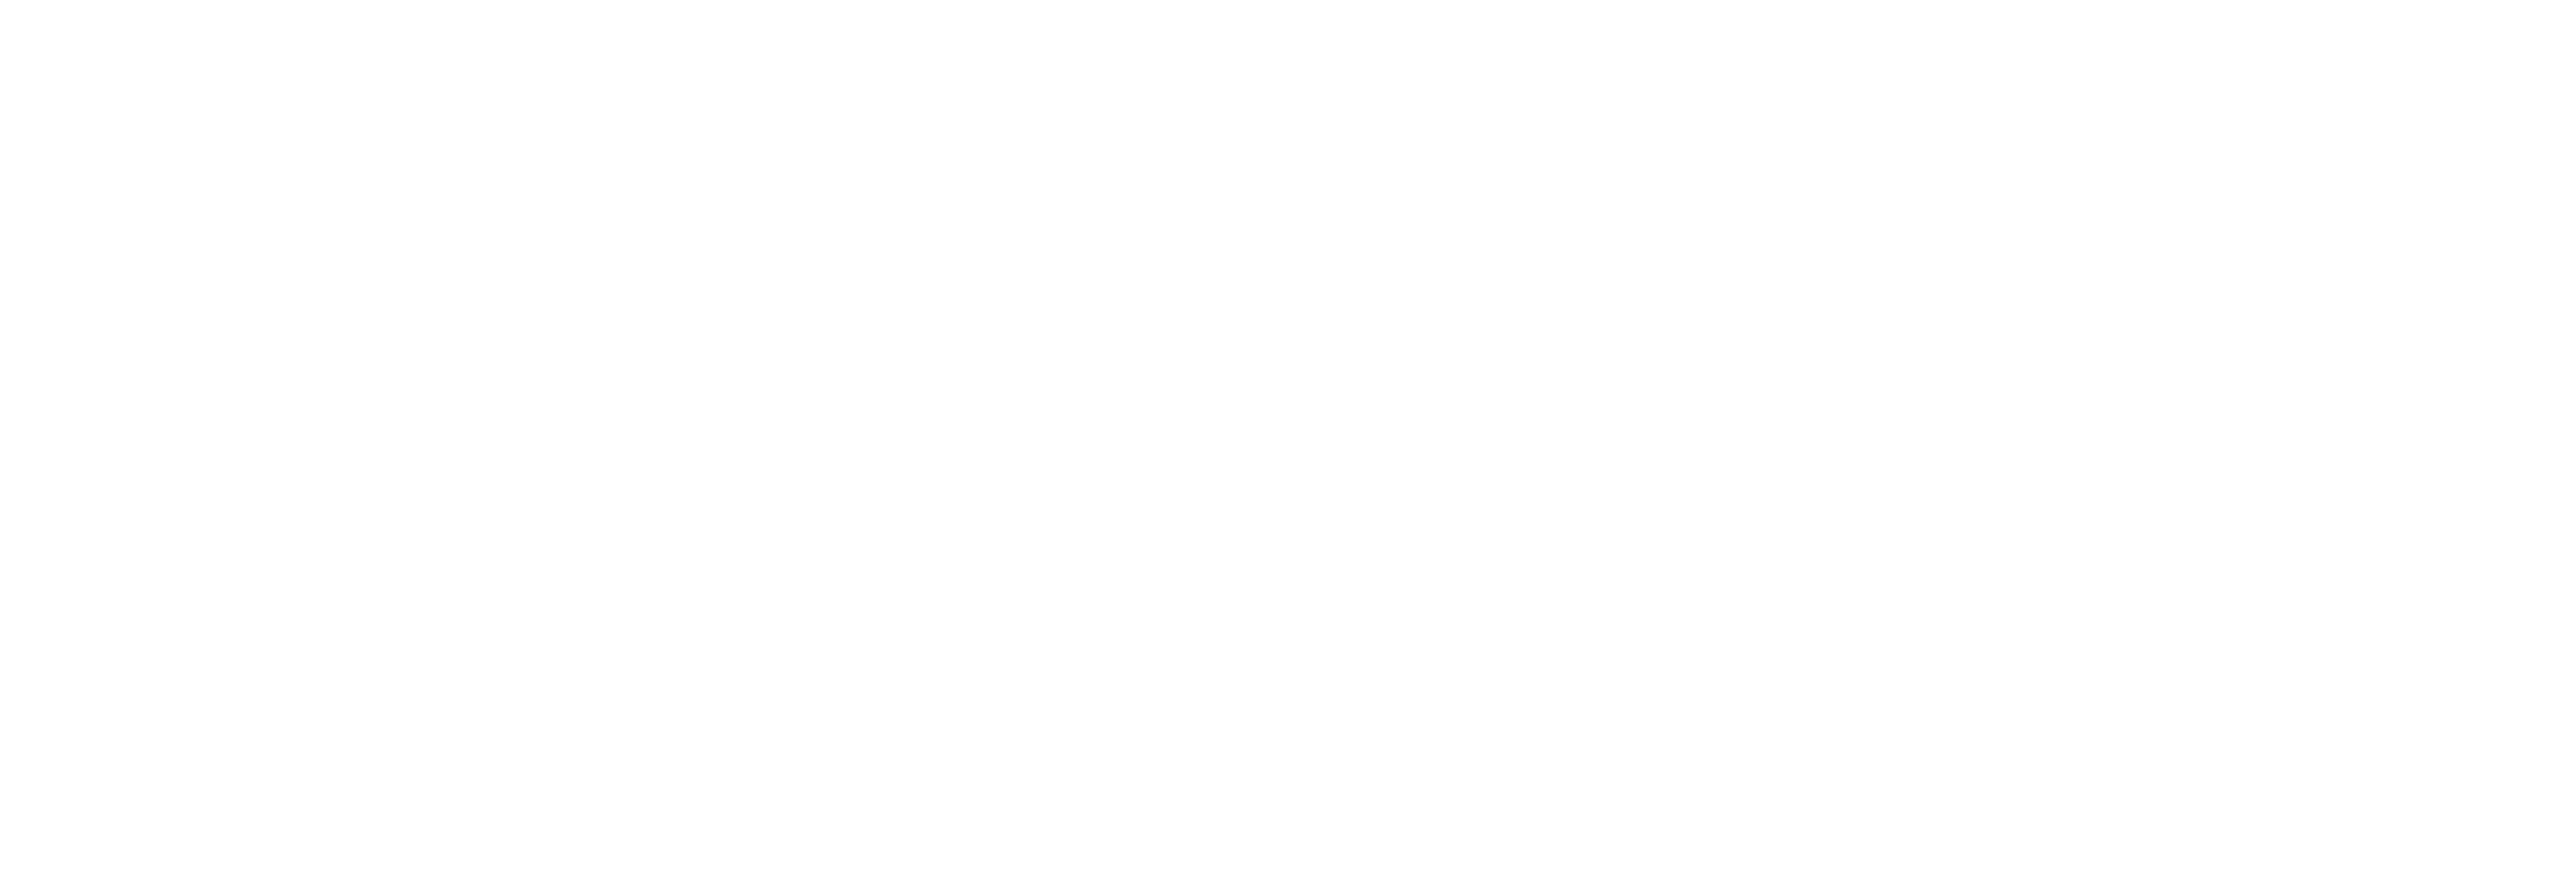 AniCura Gemert logo